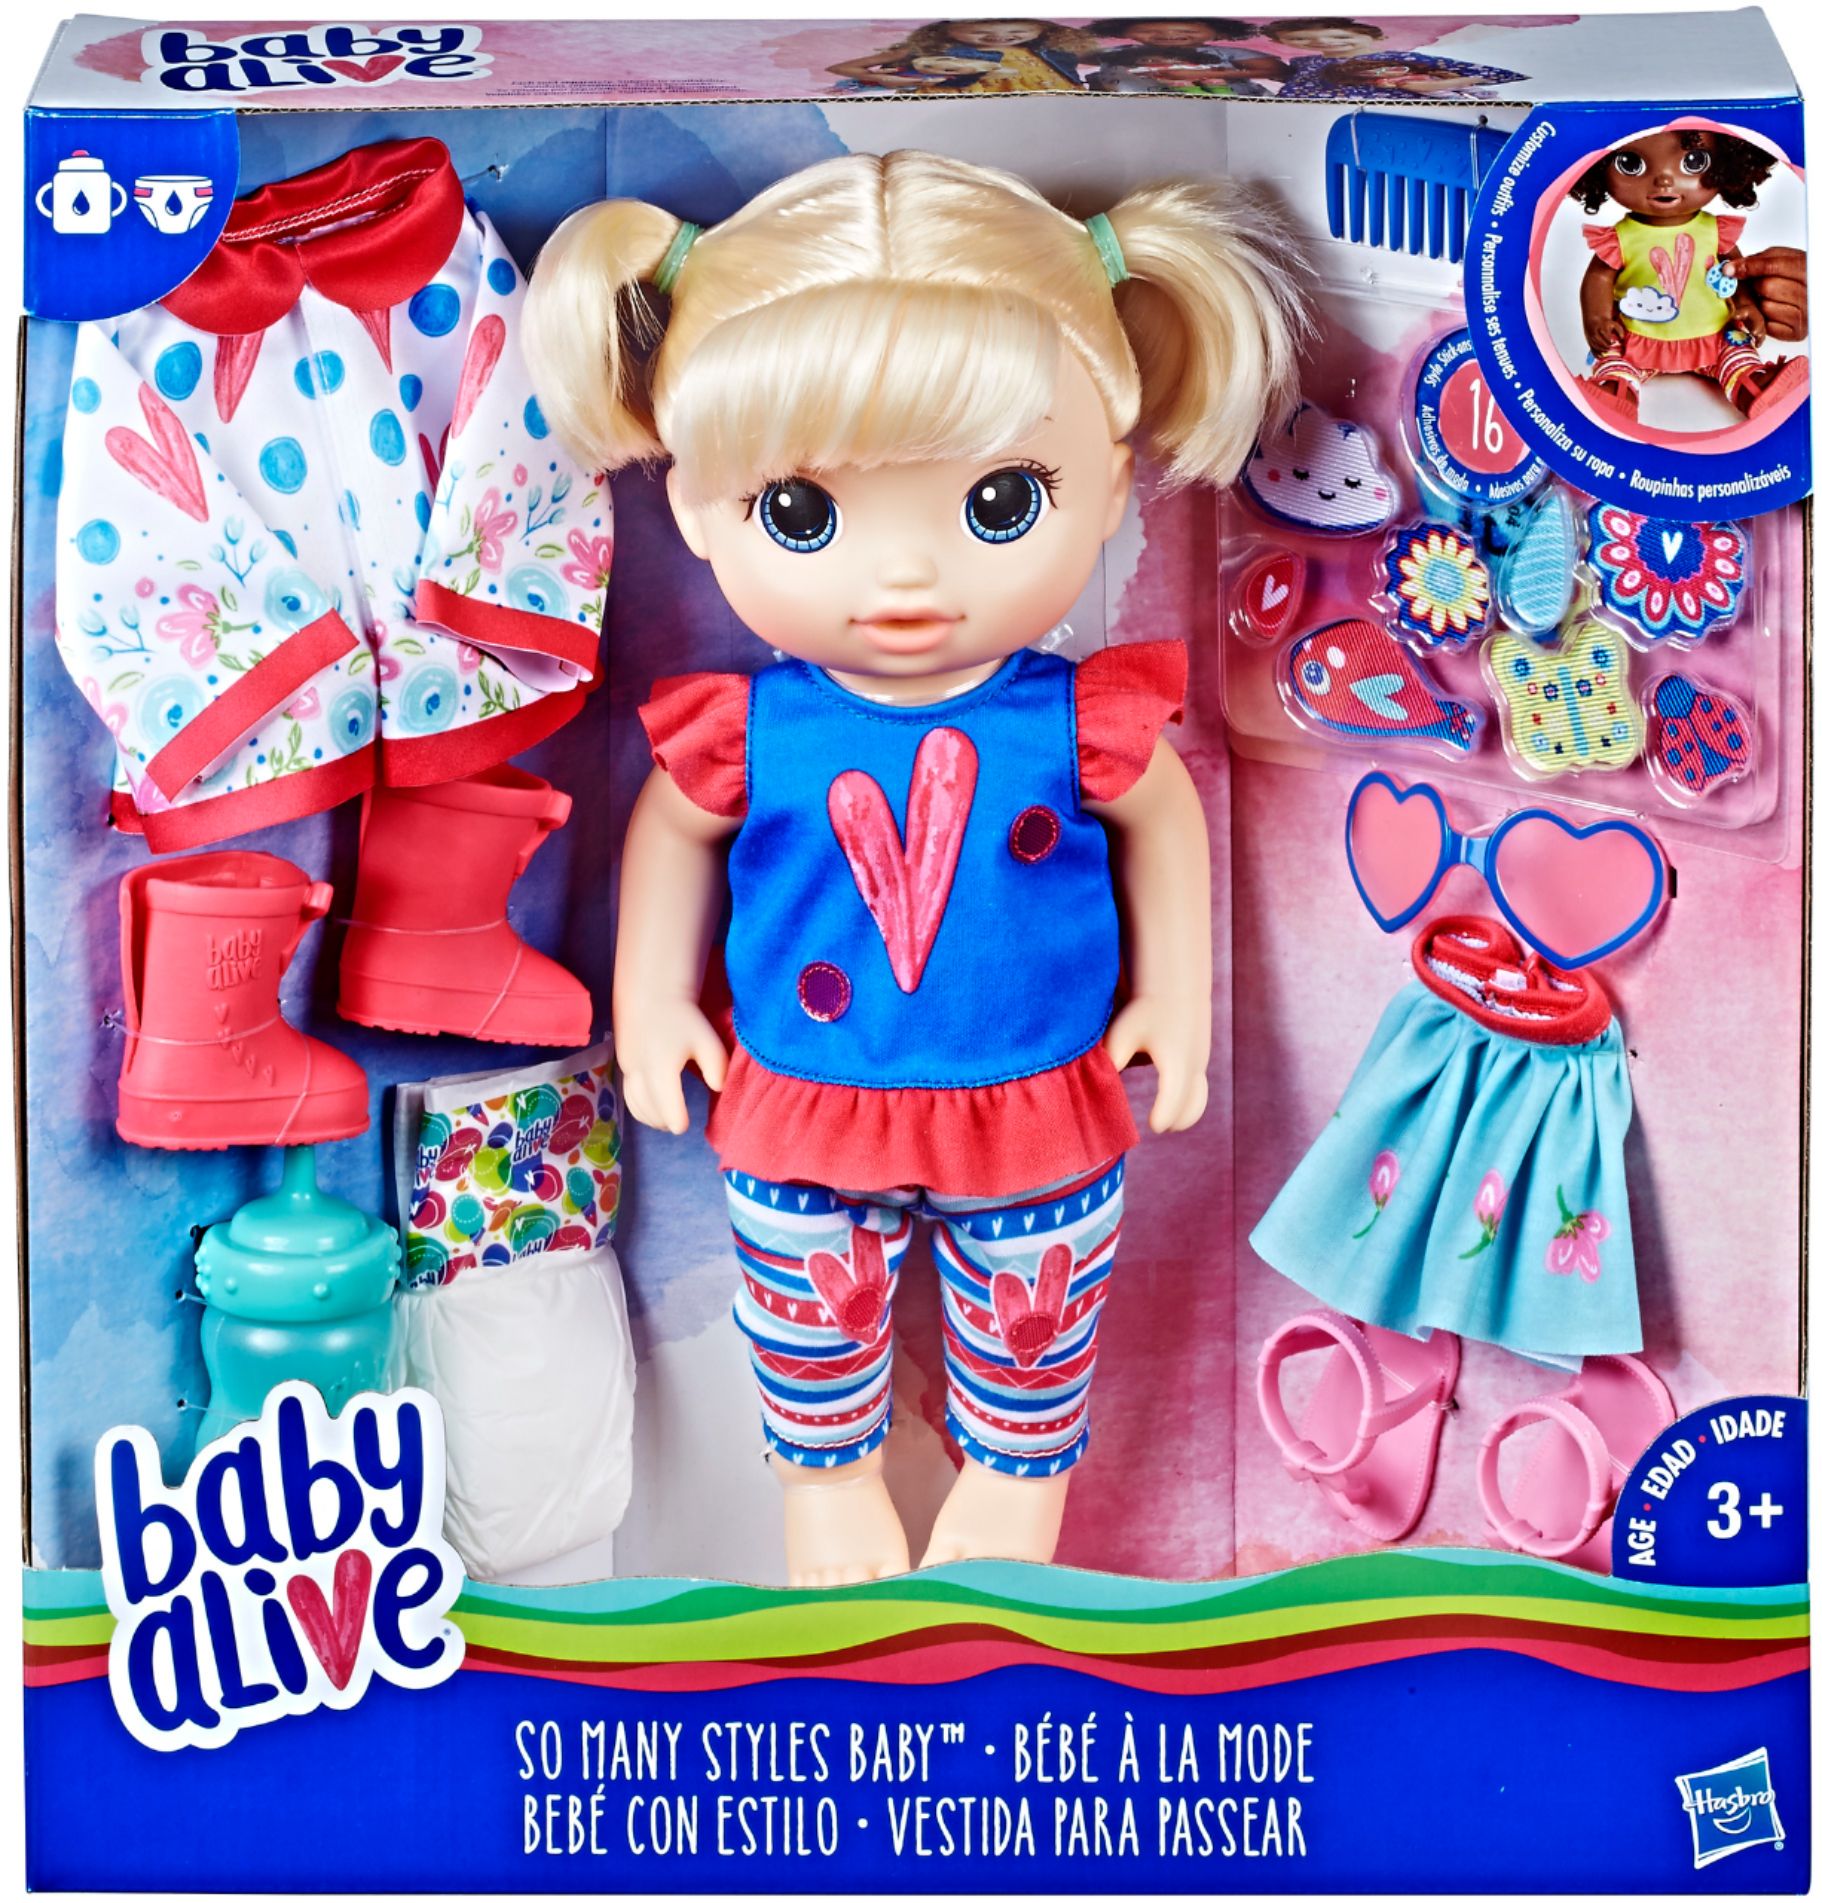 different baby alive dolls